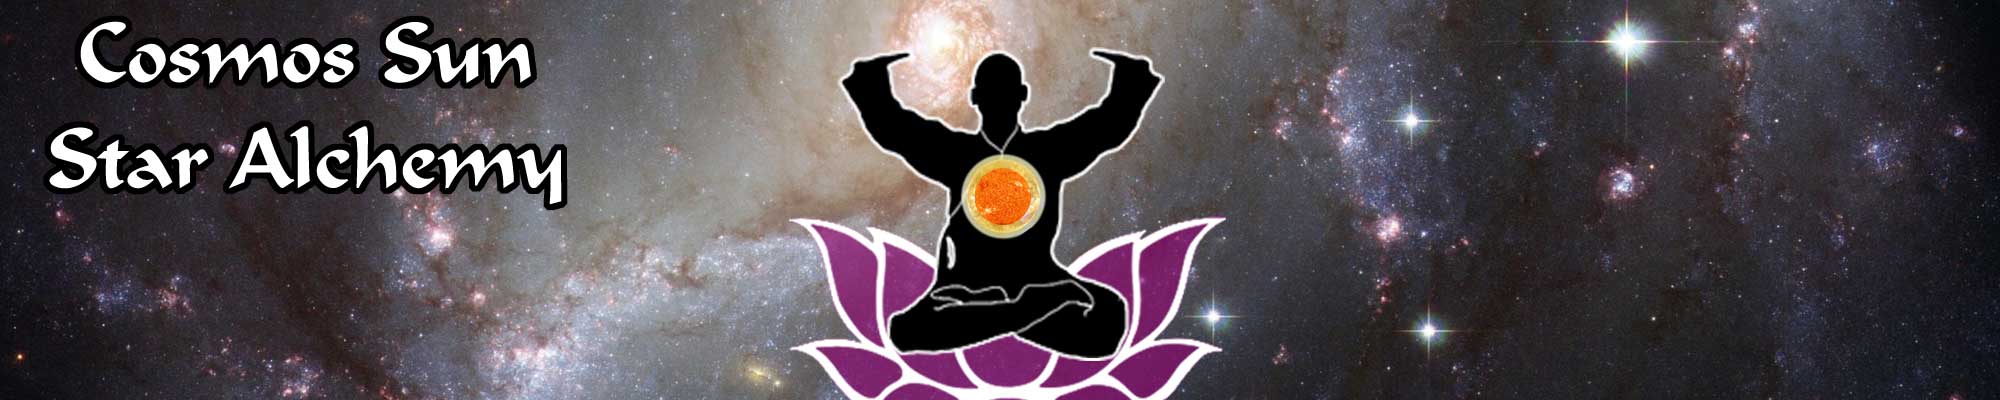 Online LIVE Energy Meditation - QiGong meditation series - Cosmos image1